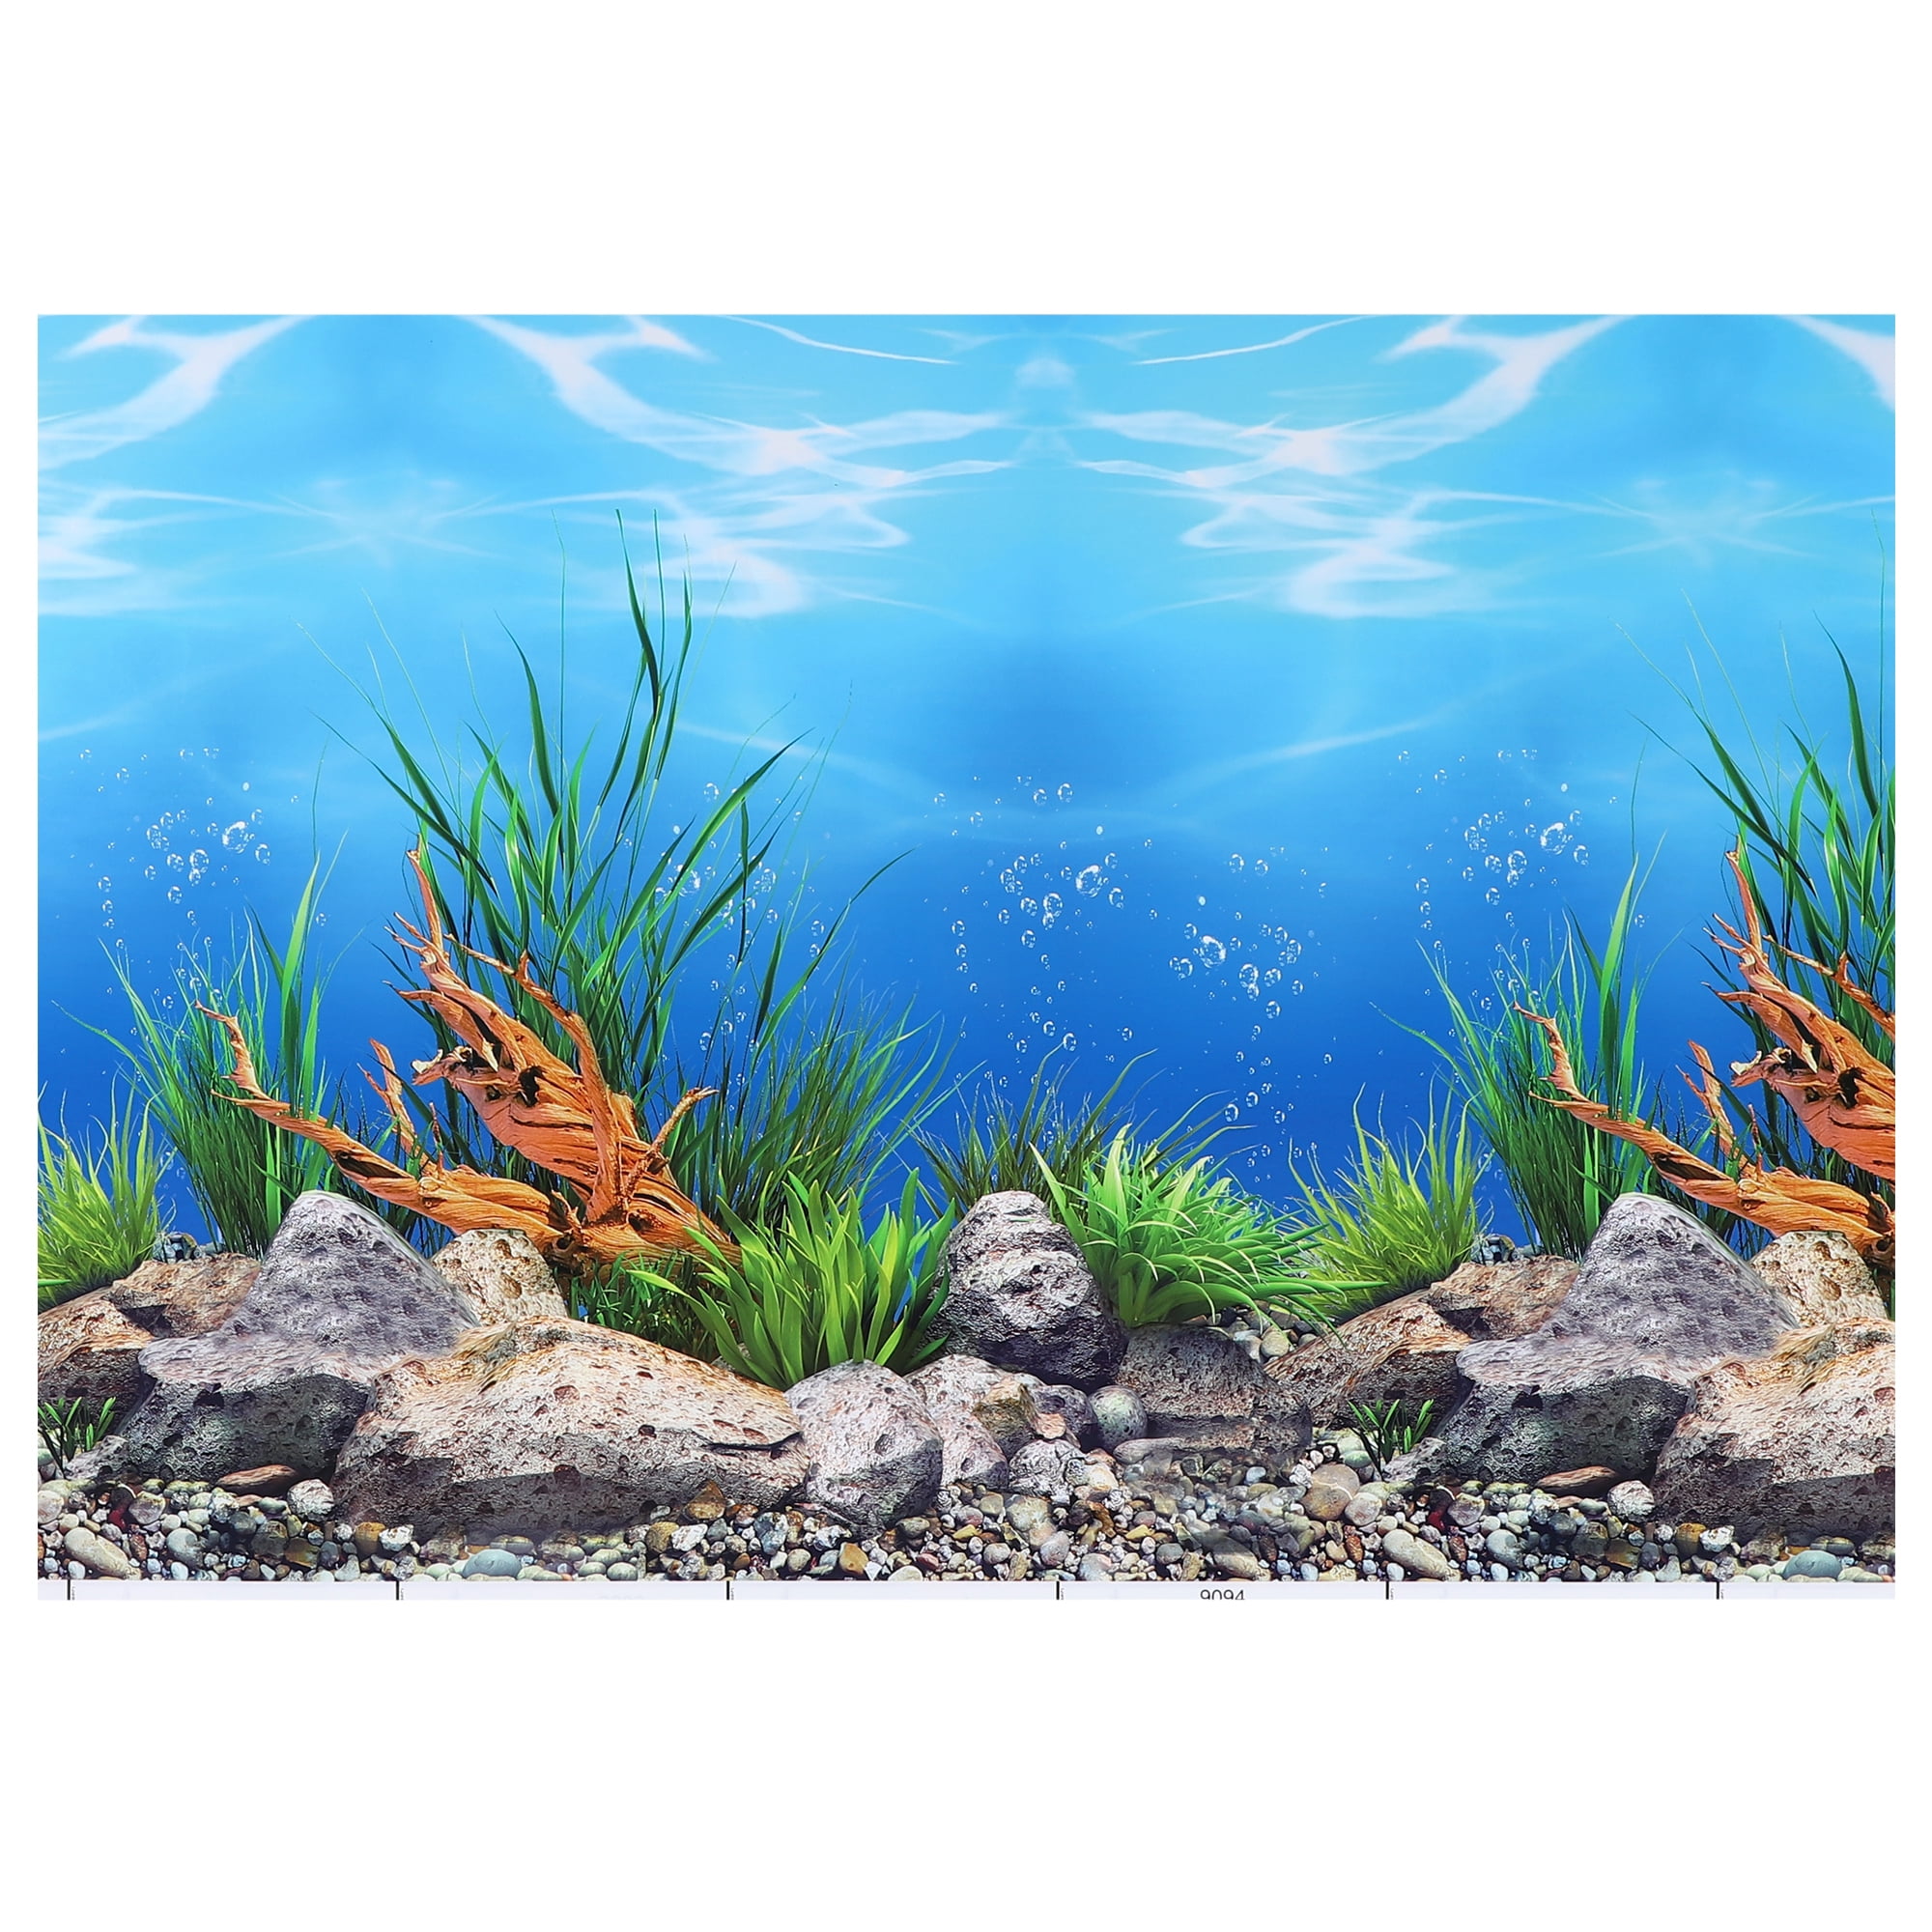 Unique Bargains Aquarium Background Poster Double-Sided Fish Tank Background Decorative Paper Sticker 24.41 inchx15.75 inch, Size: 24.41 x 15.75